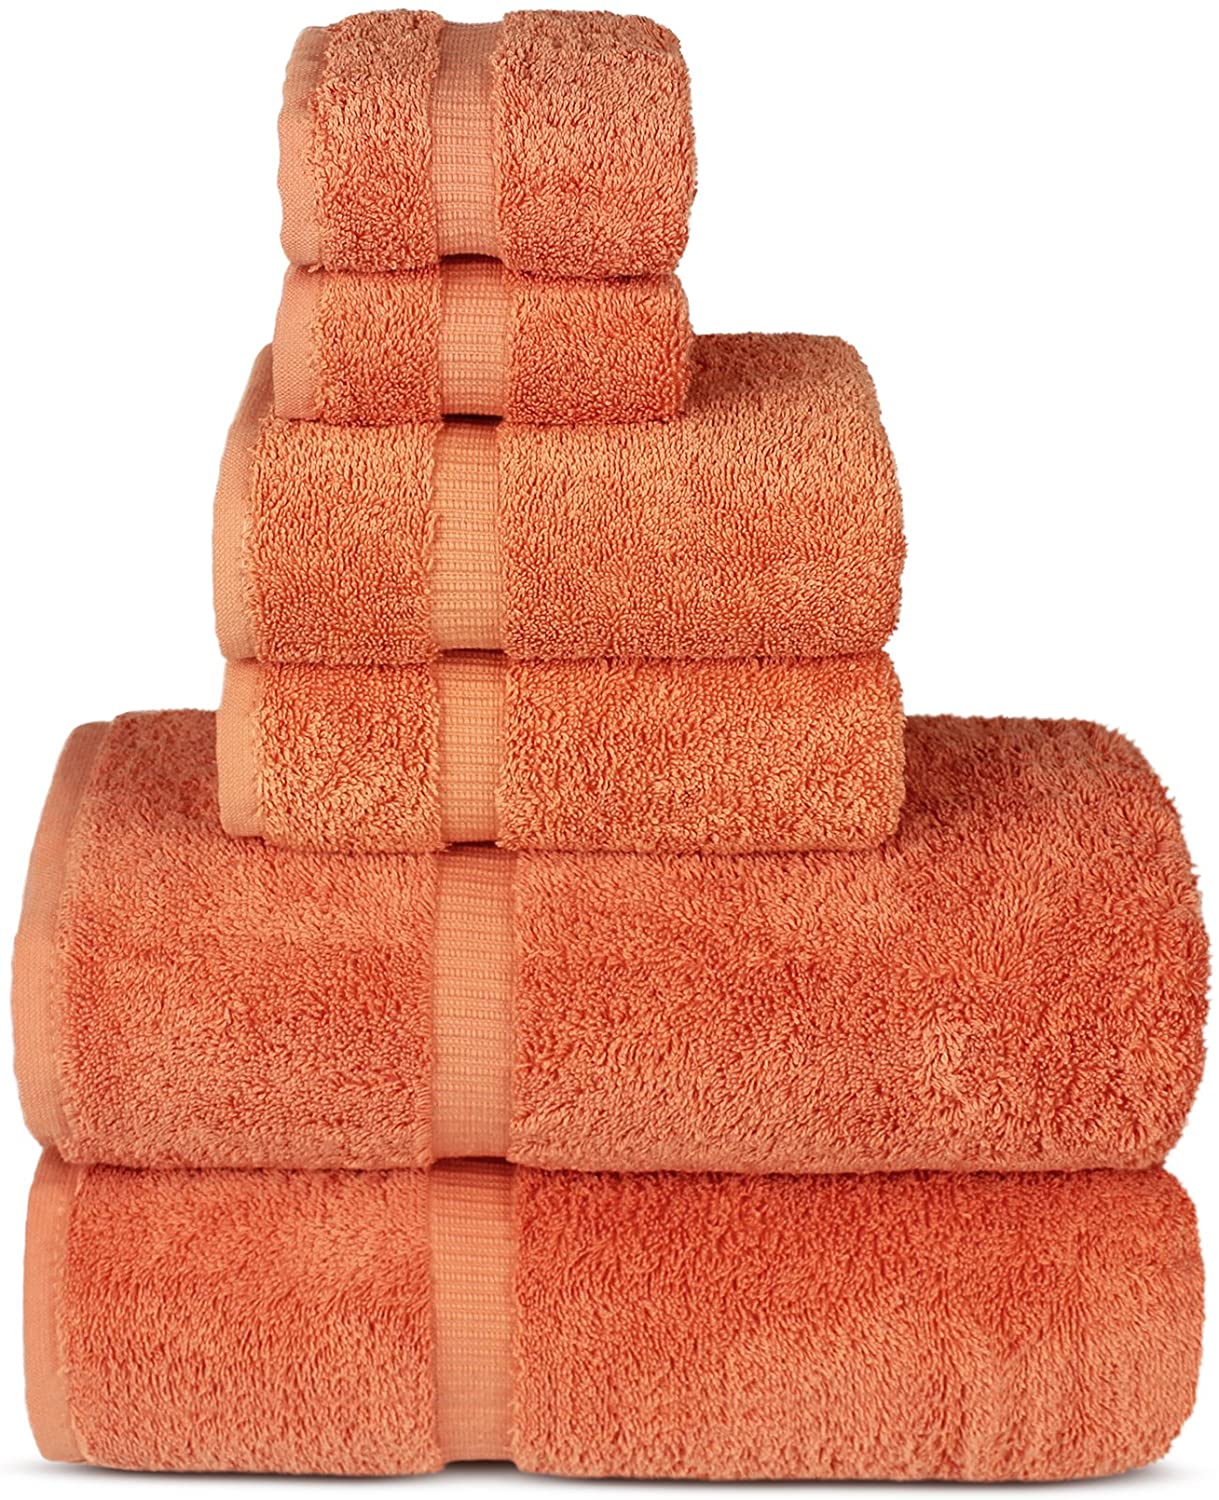 Photo 1 of Chakir Turkish Linens Luxury Spa and Hotel Quality Premium Turkish Cotton 6Piece Towel Set 2 x Bath Towels 2 x Hand Towels 2 x Washcloths Coral